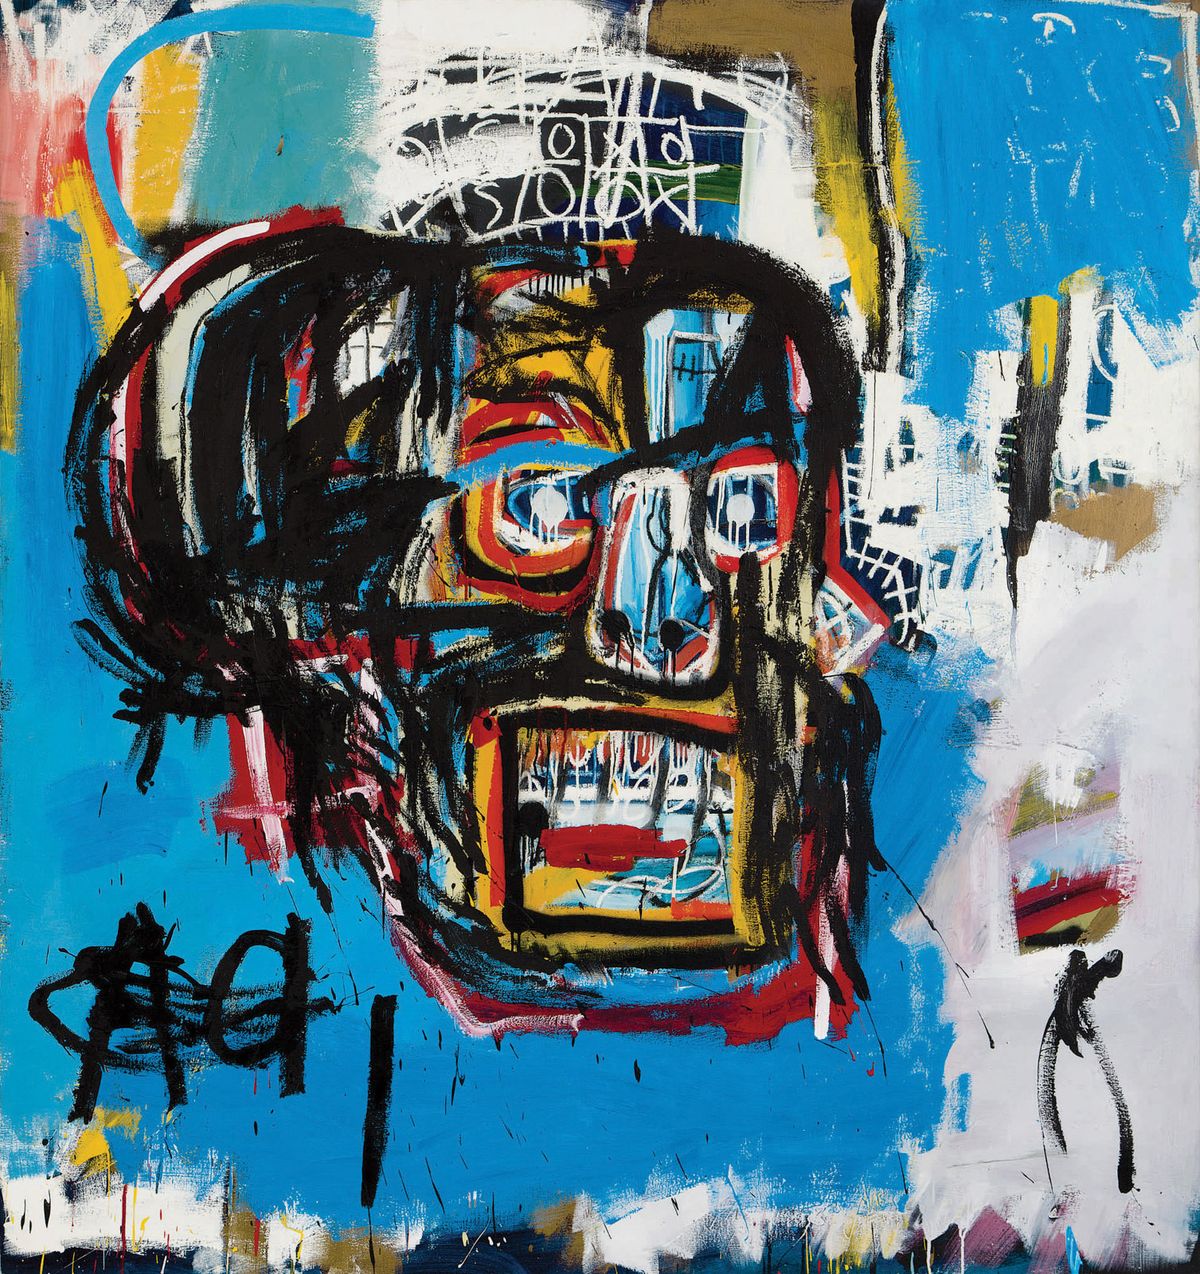 Jean-Michel Basquiat, Untitled (1982) 2017 The Estate of Jean-Michel Basquiat / ADAGP, Paris / ARS Courtesy Sotheby’s